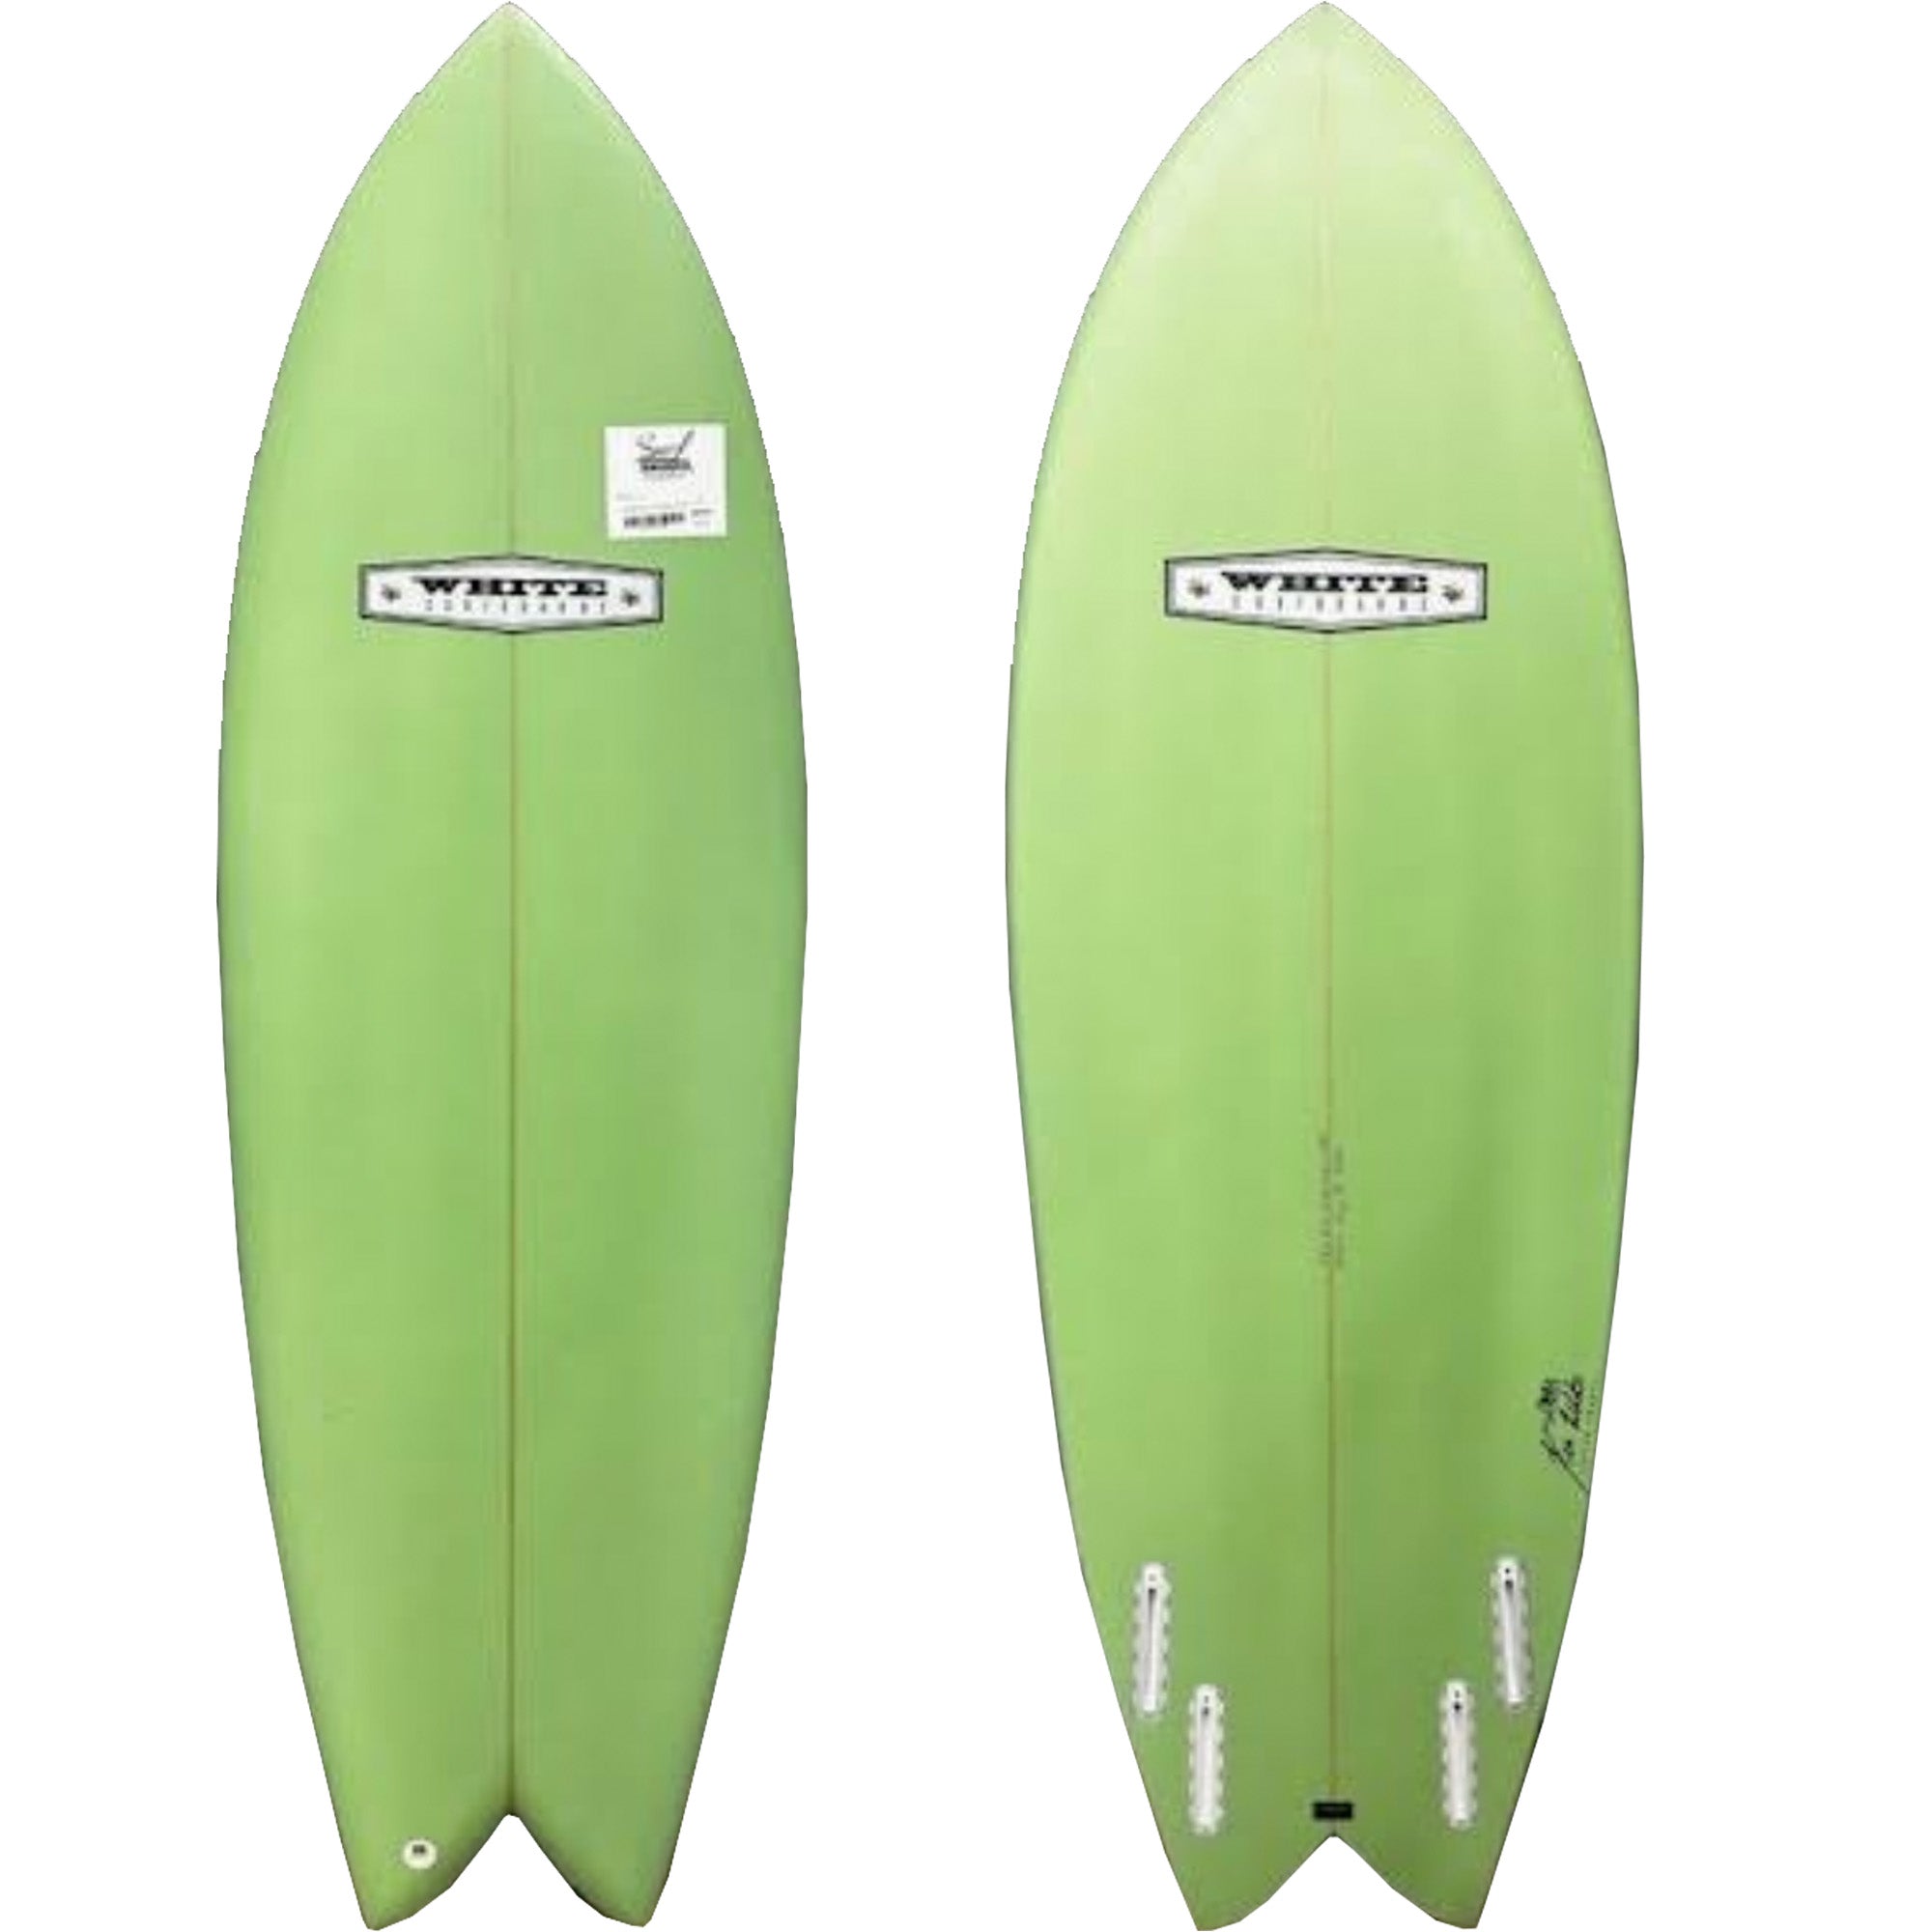 Ken White Quad Fish Surfboard - Futures